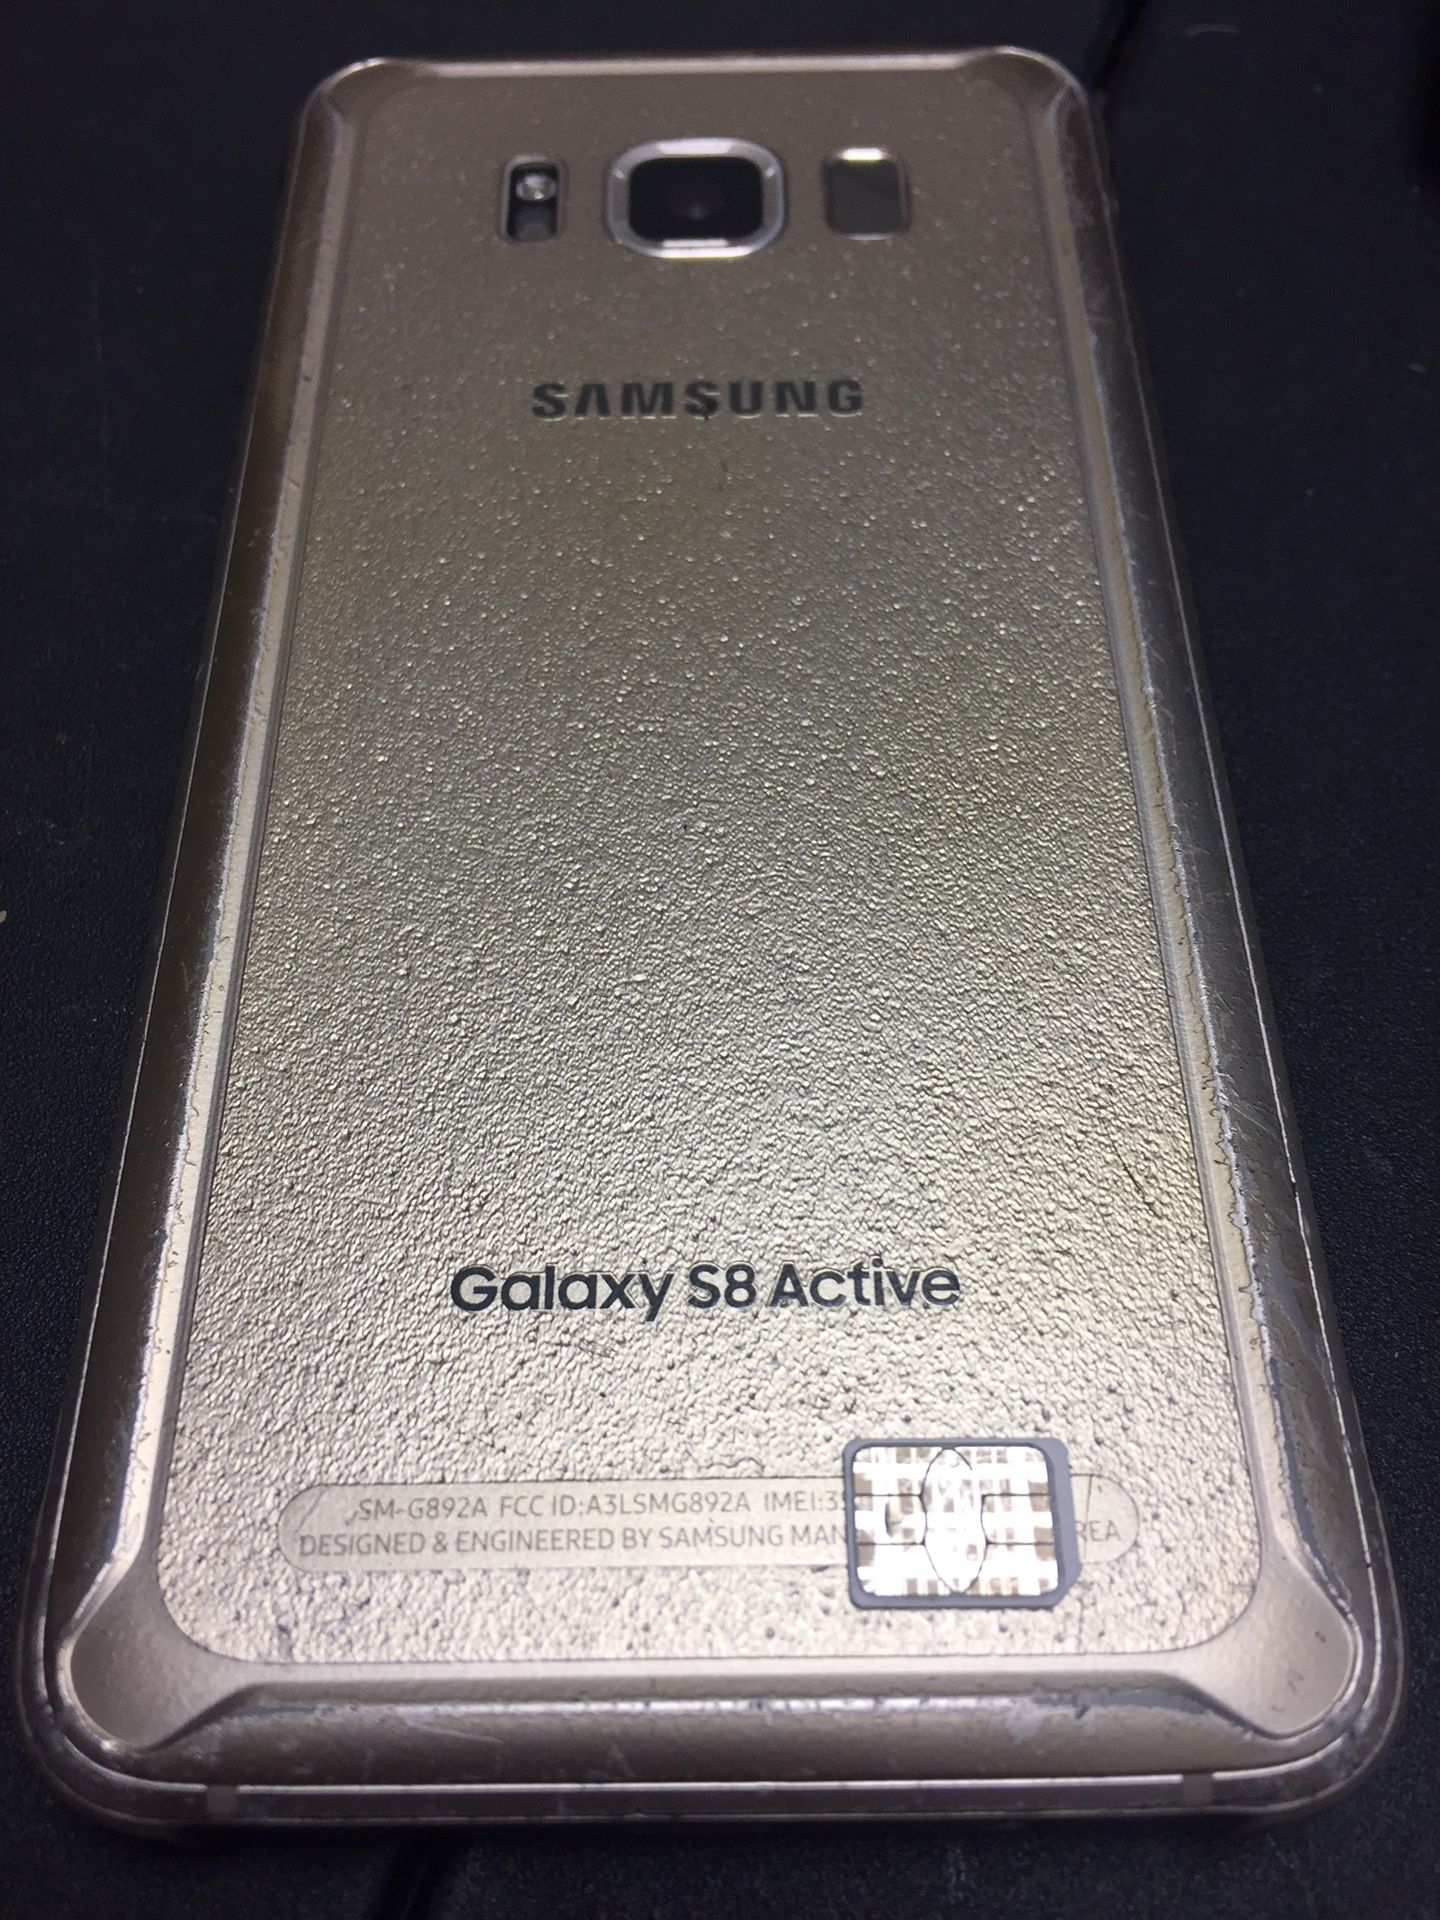 Galaxy S8 active unlocked with warranty!